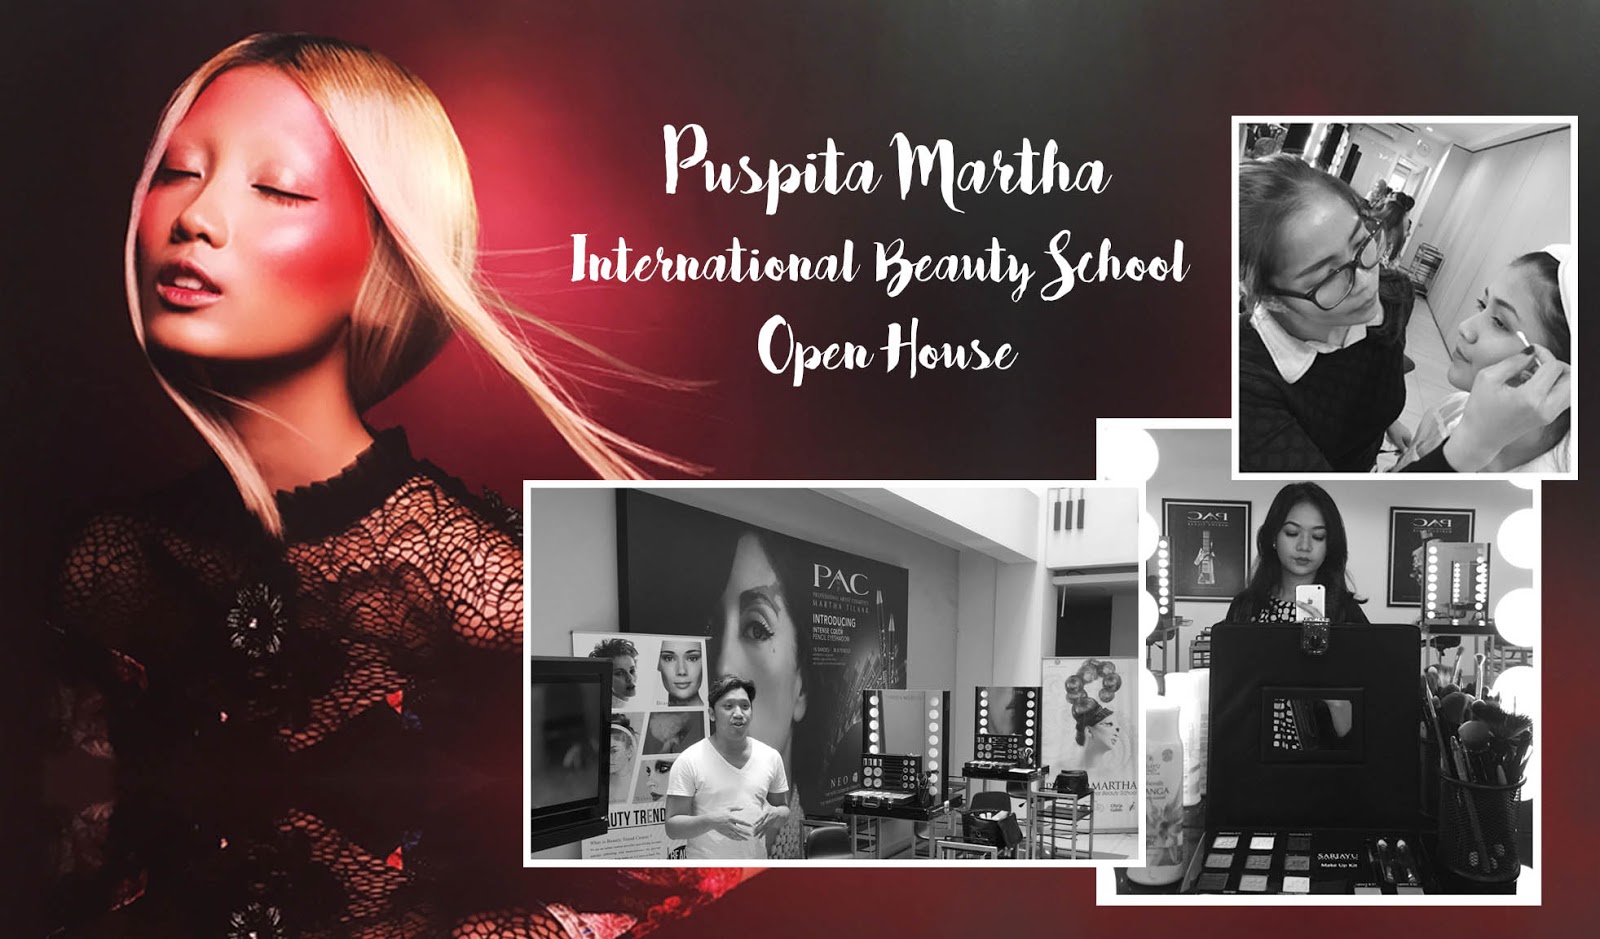 Puspita Martha International Beauty School Open House Roosvansia